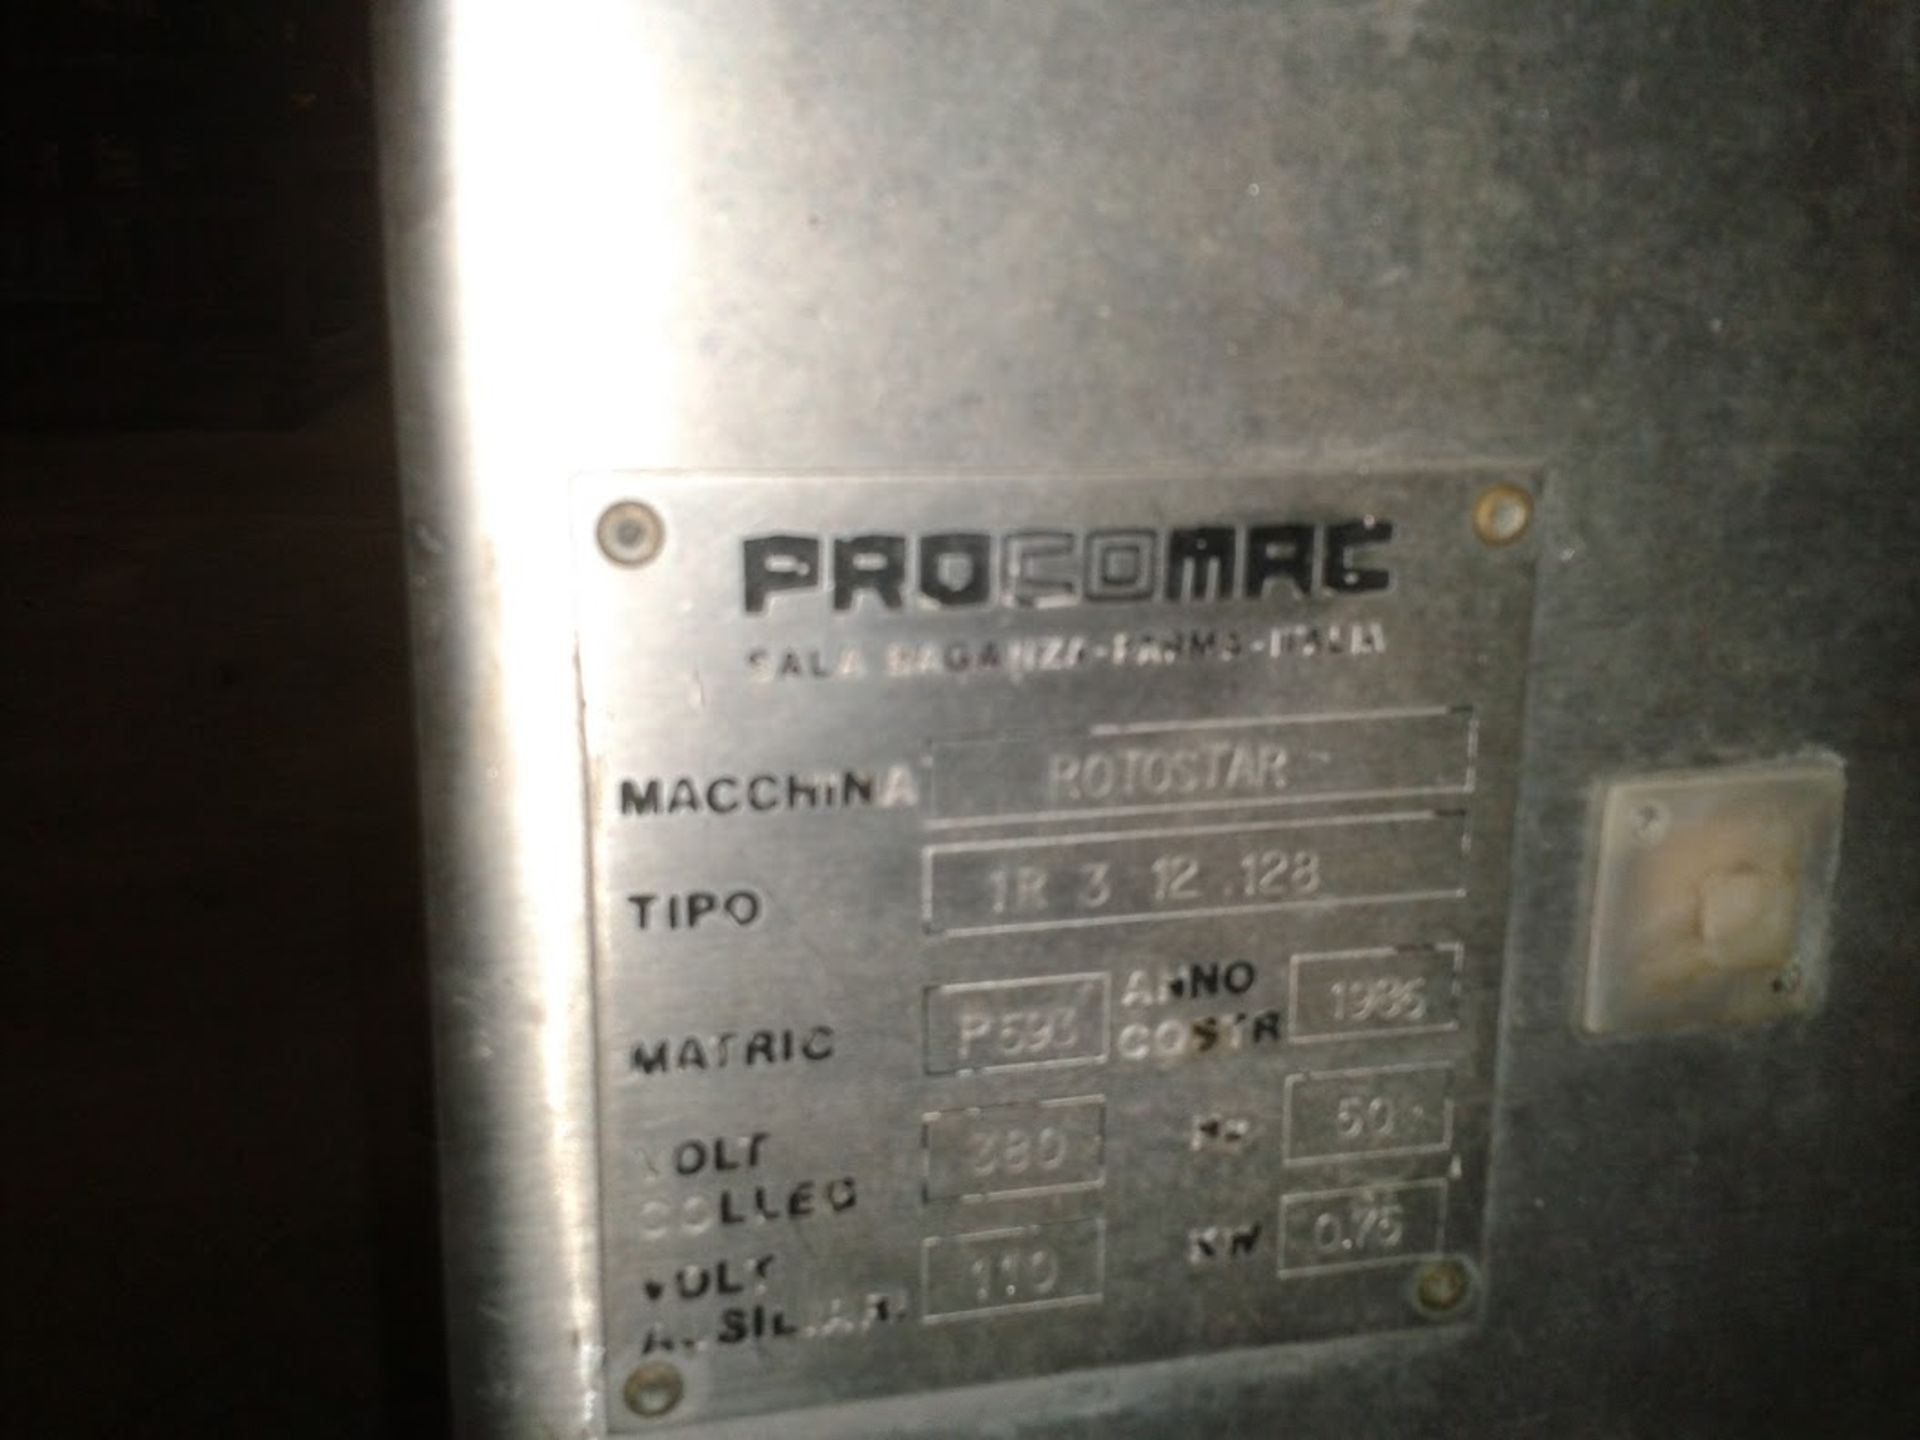 Procomac Rotostar 1R 3 12.128 12 Head Bottle Washer, Matric P593, 1500mm x 1200mm - Image 5 of 5